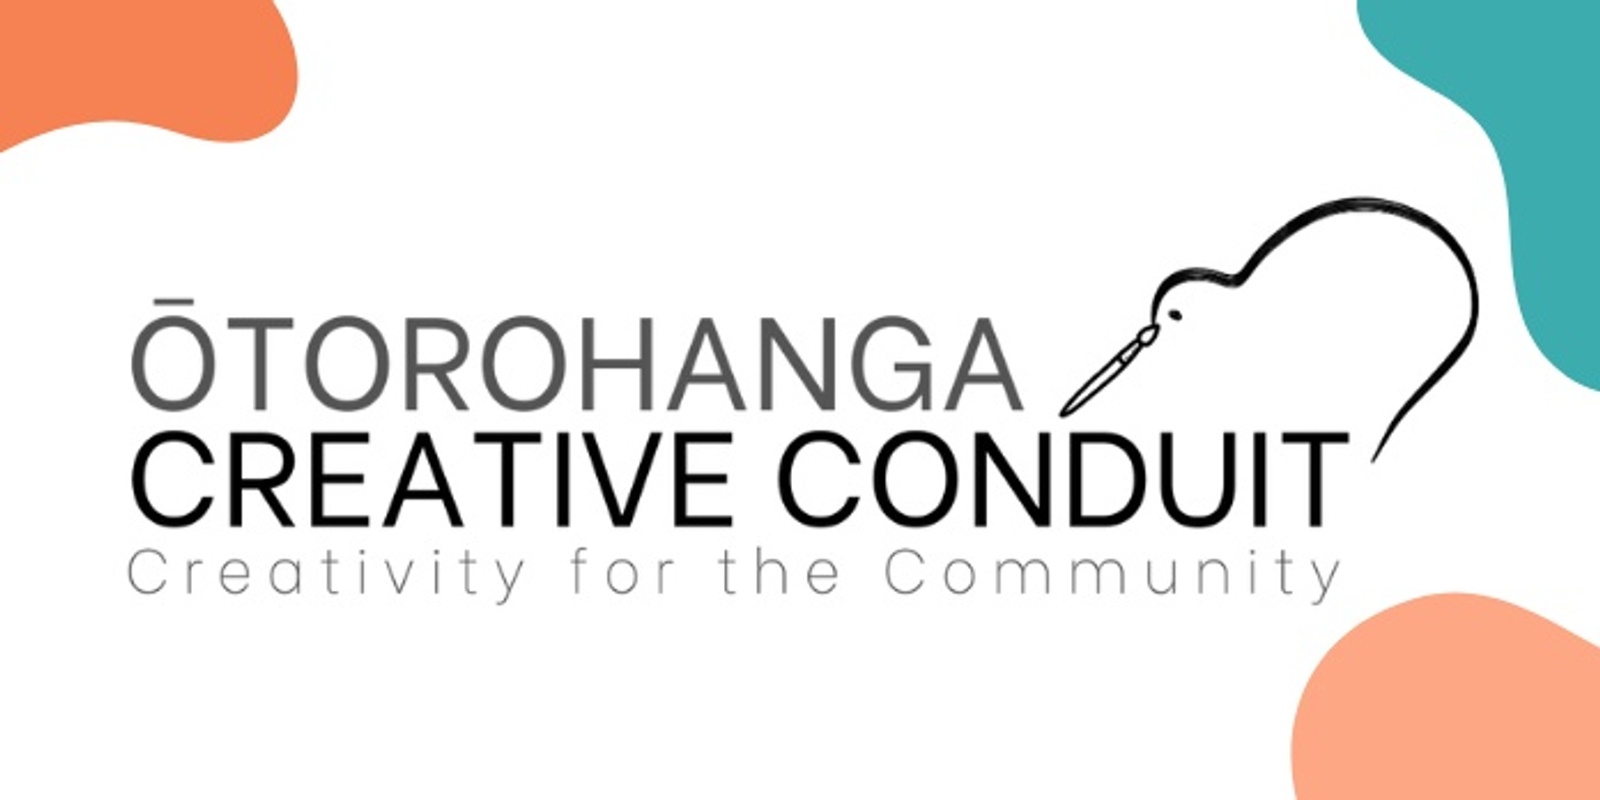 Ōtorohanga Creative Conduit's banner